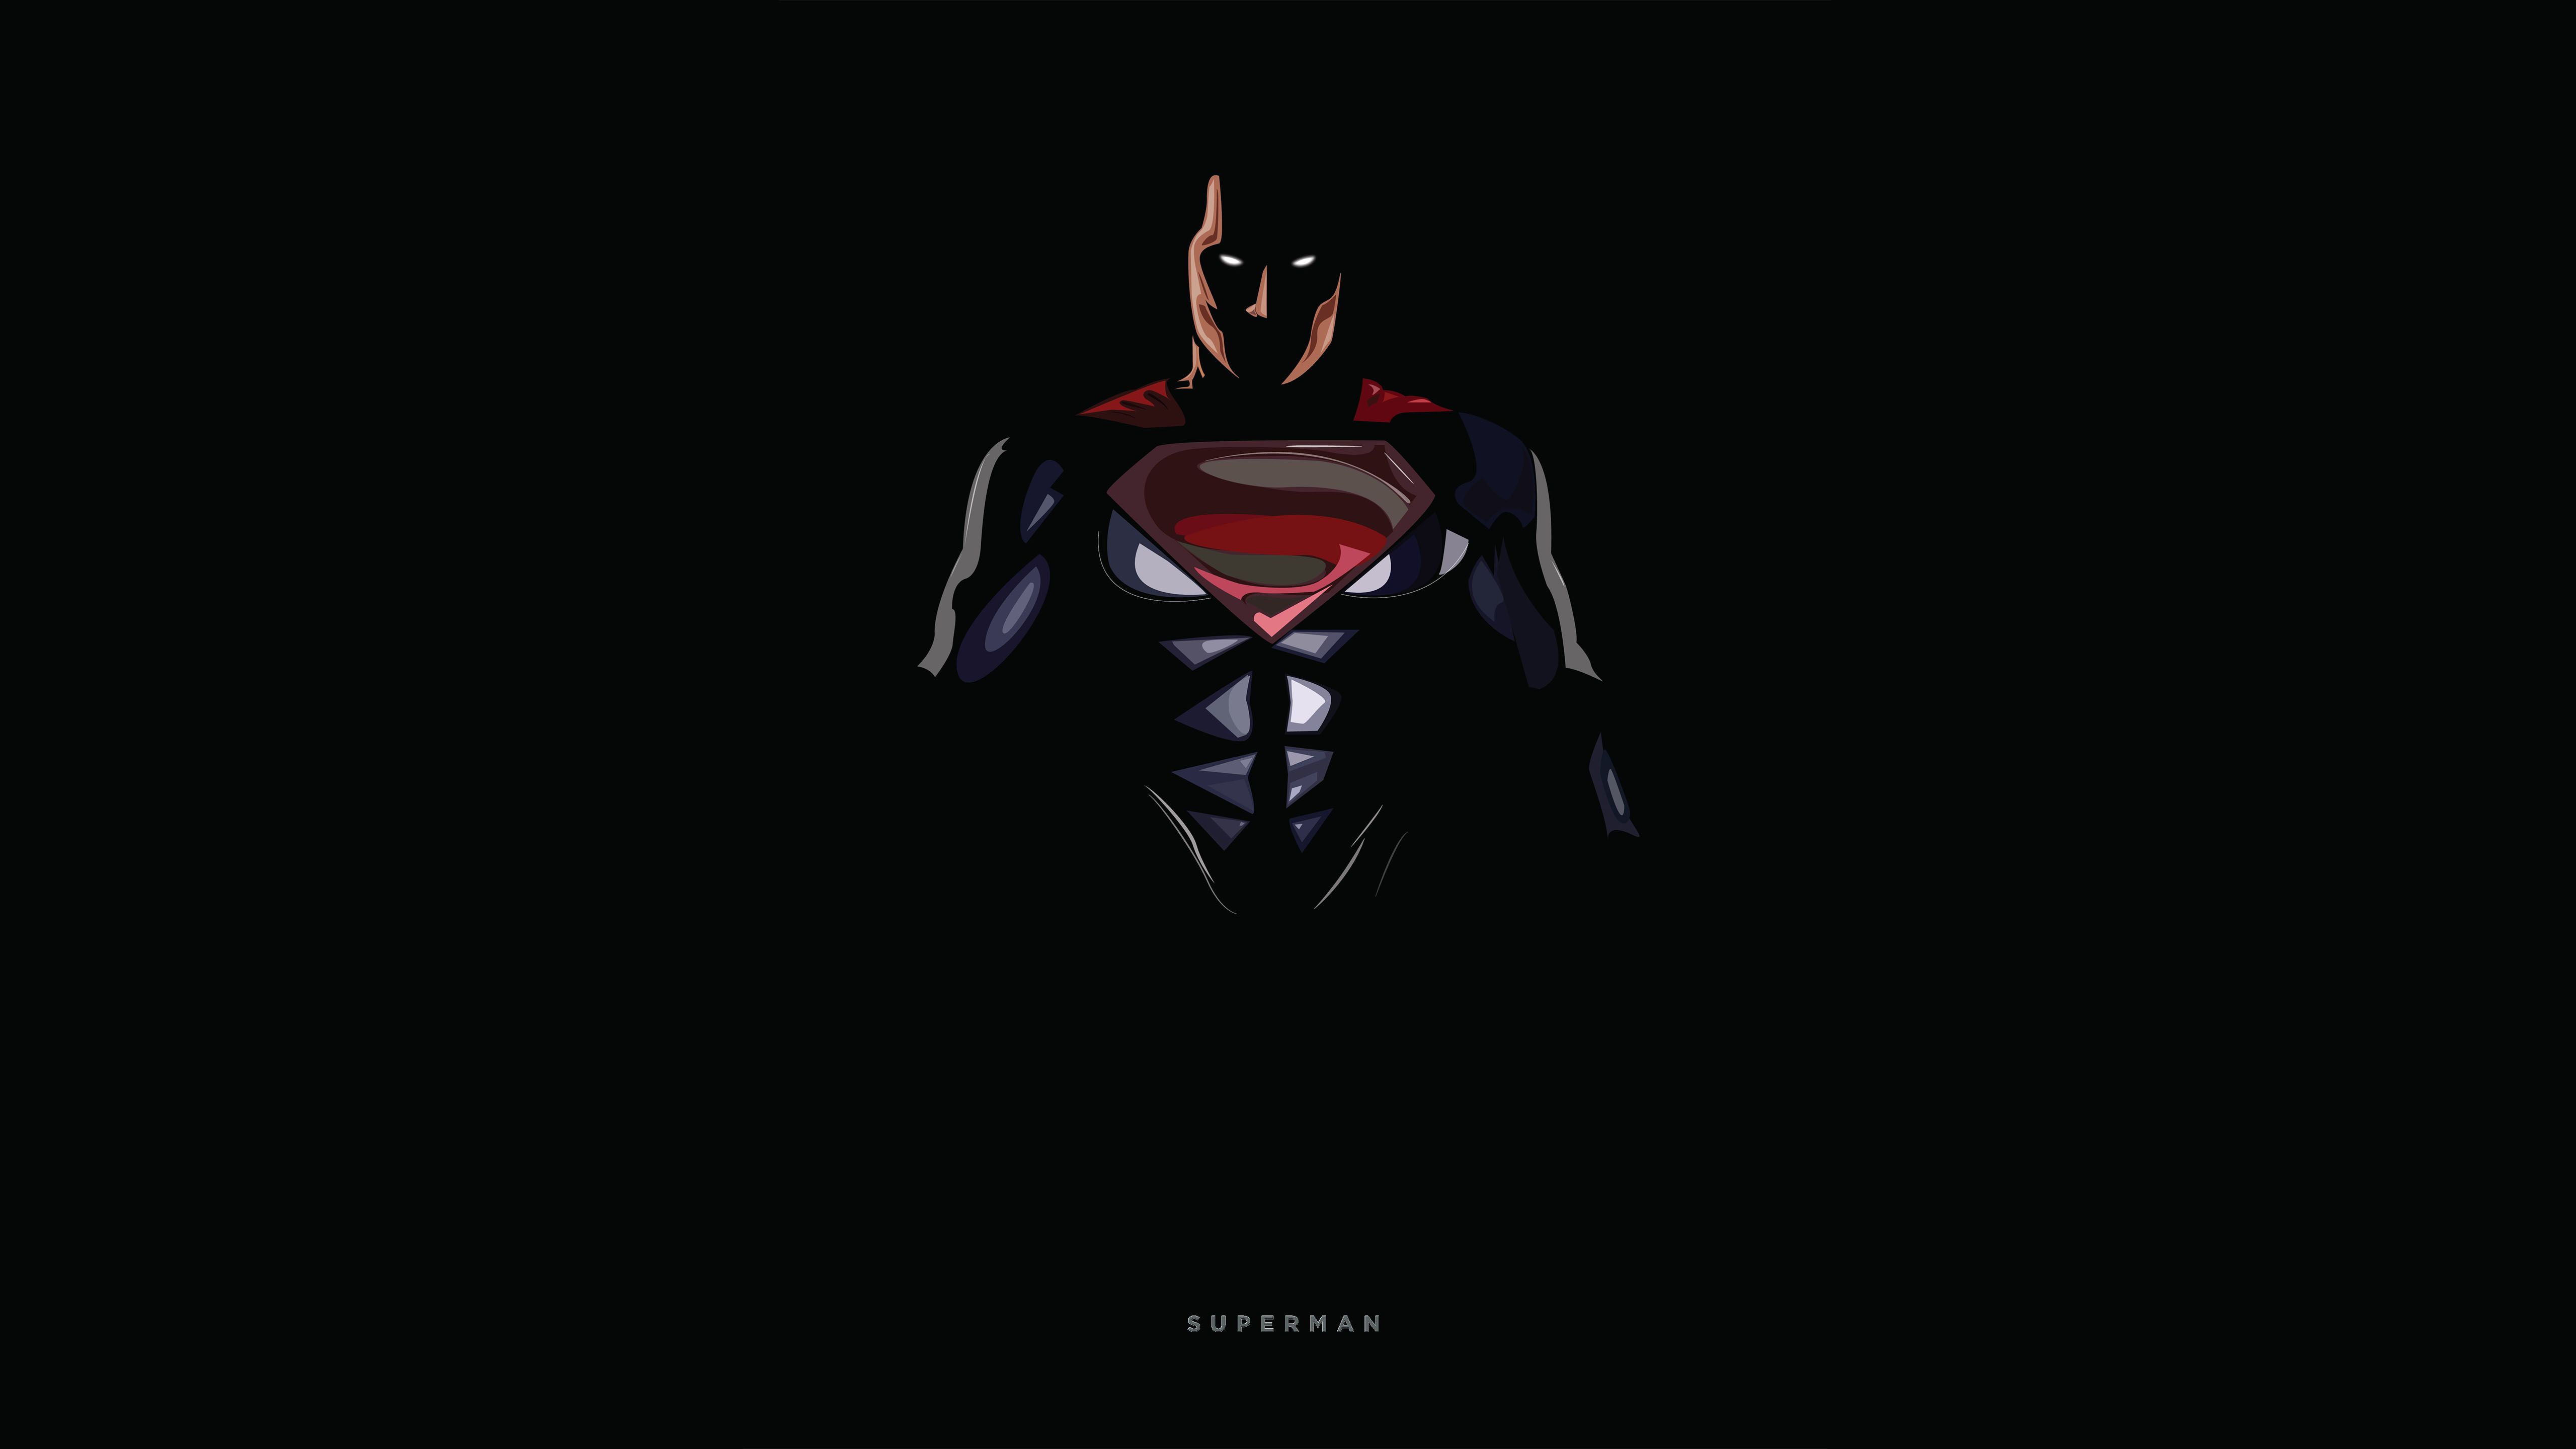 Superman Minimal 5k, HD Superheroes, 4k Wallpaper, Image